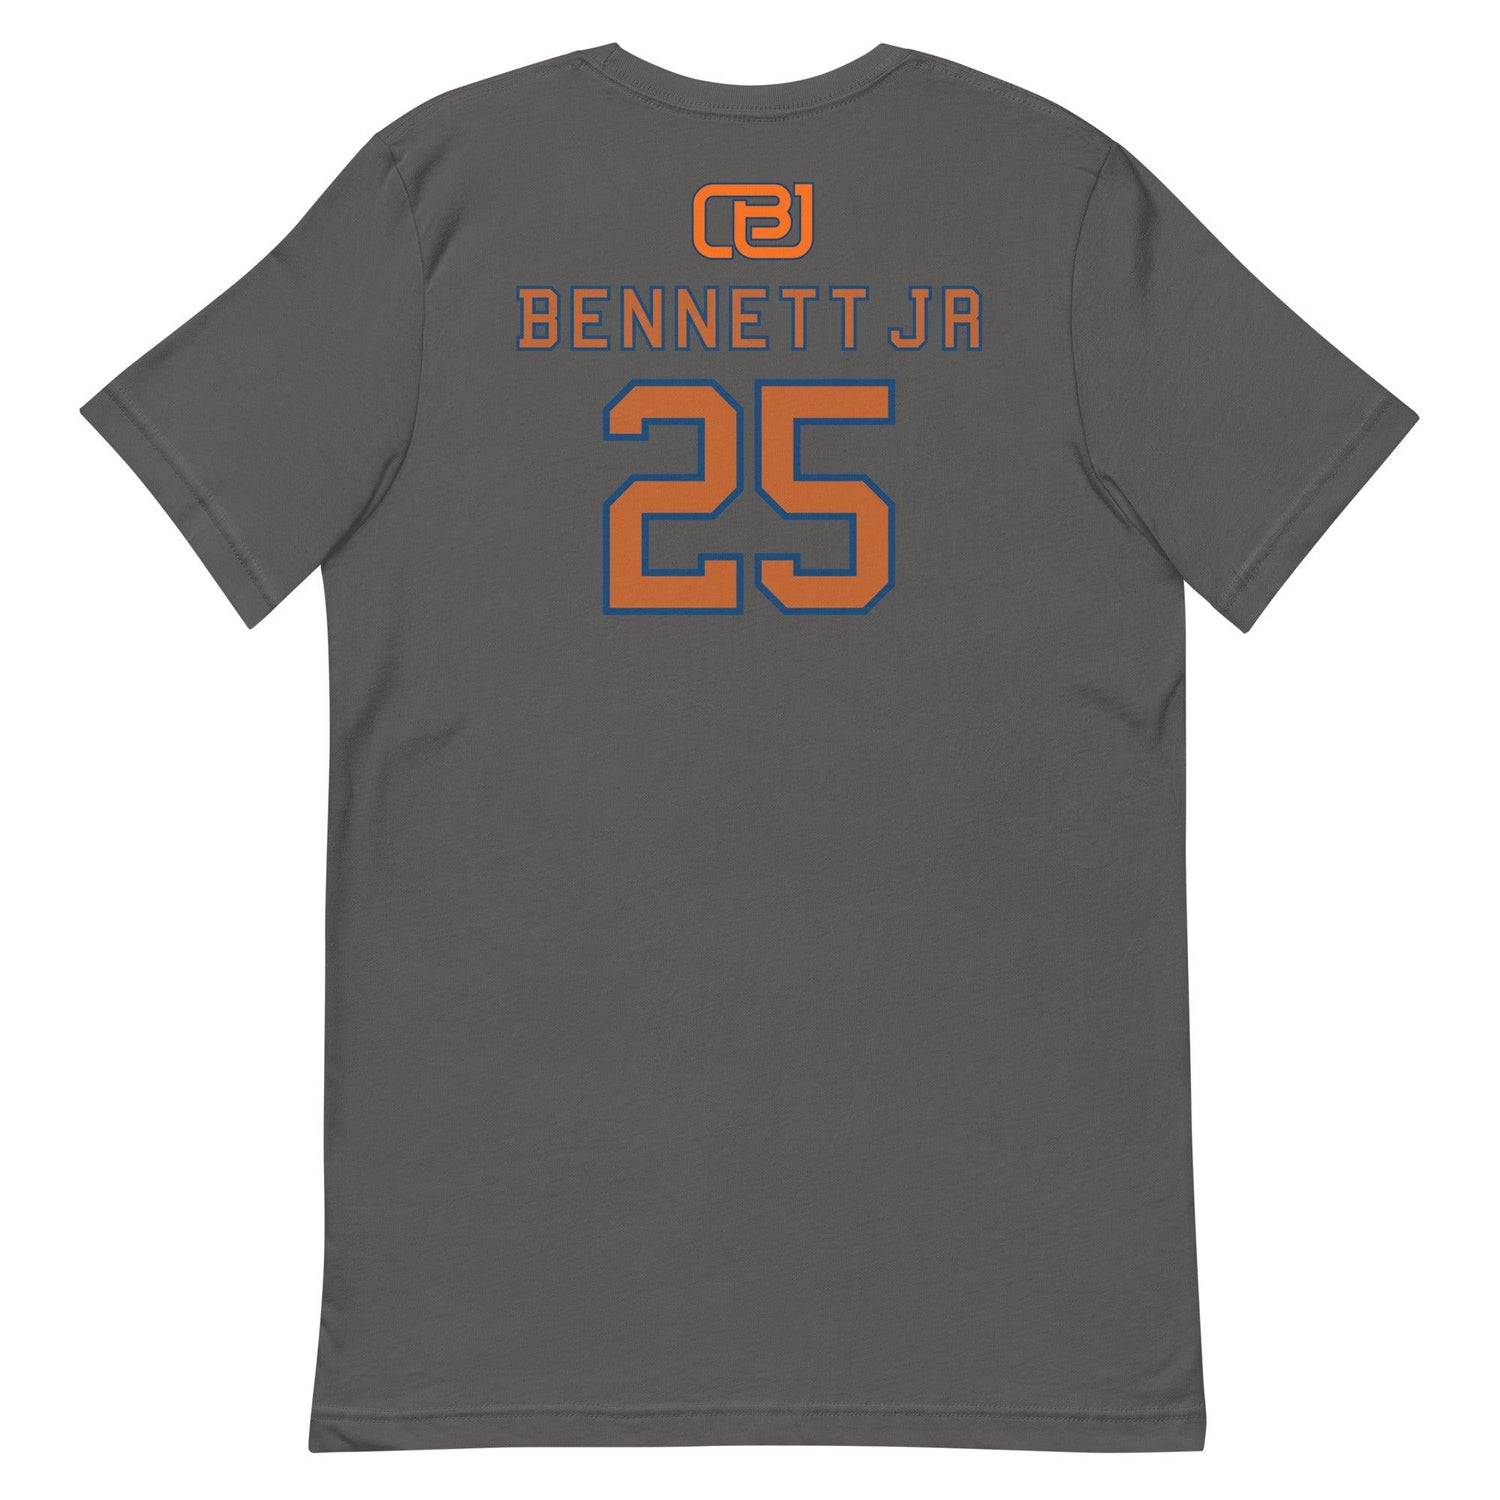 Chico Bennett Jr. "Jersey" t-shirt - Fan Arch